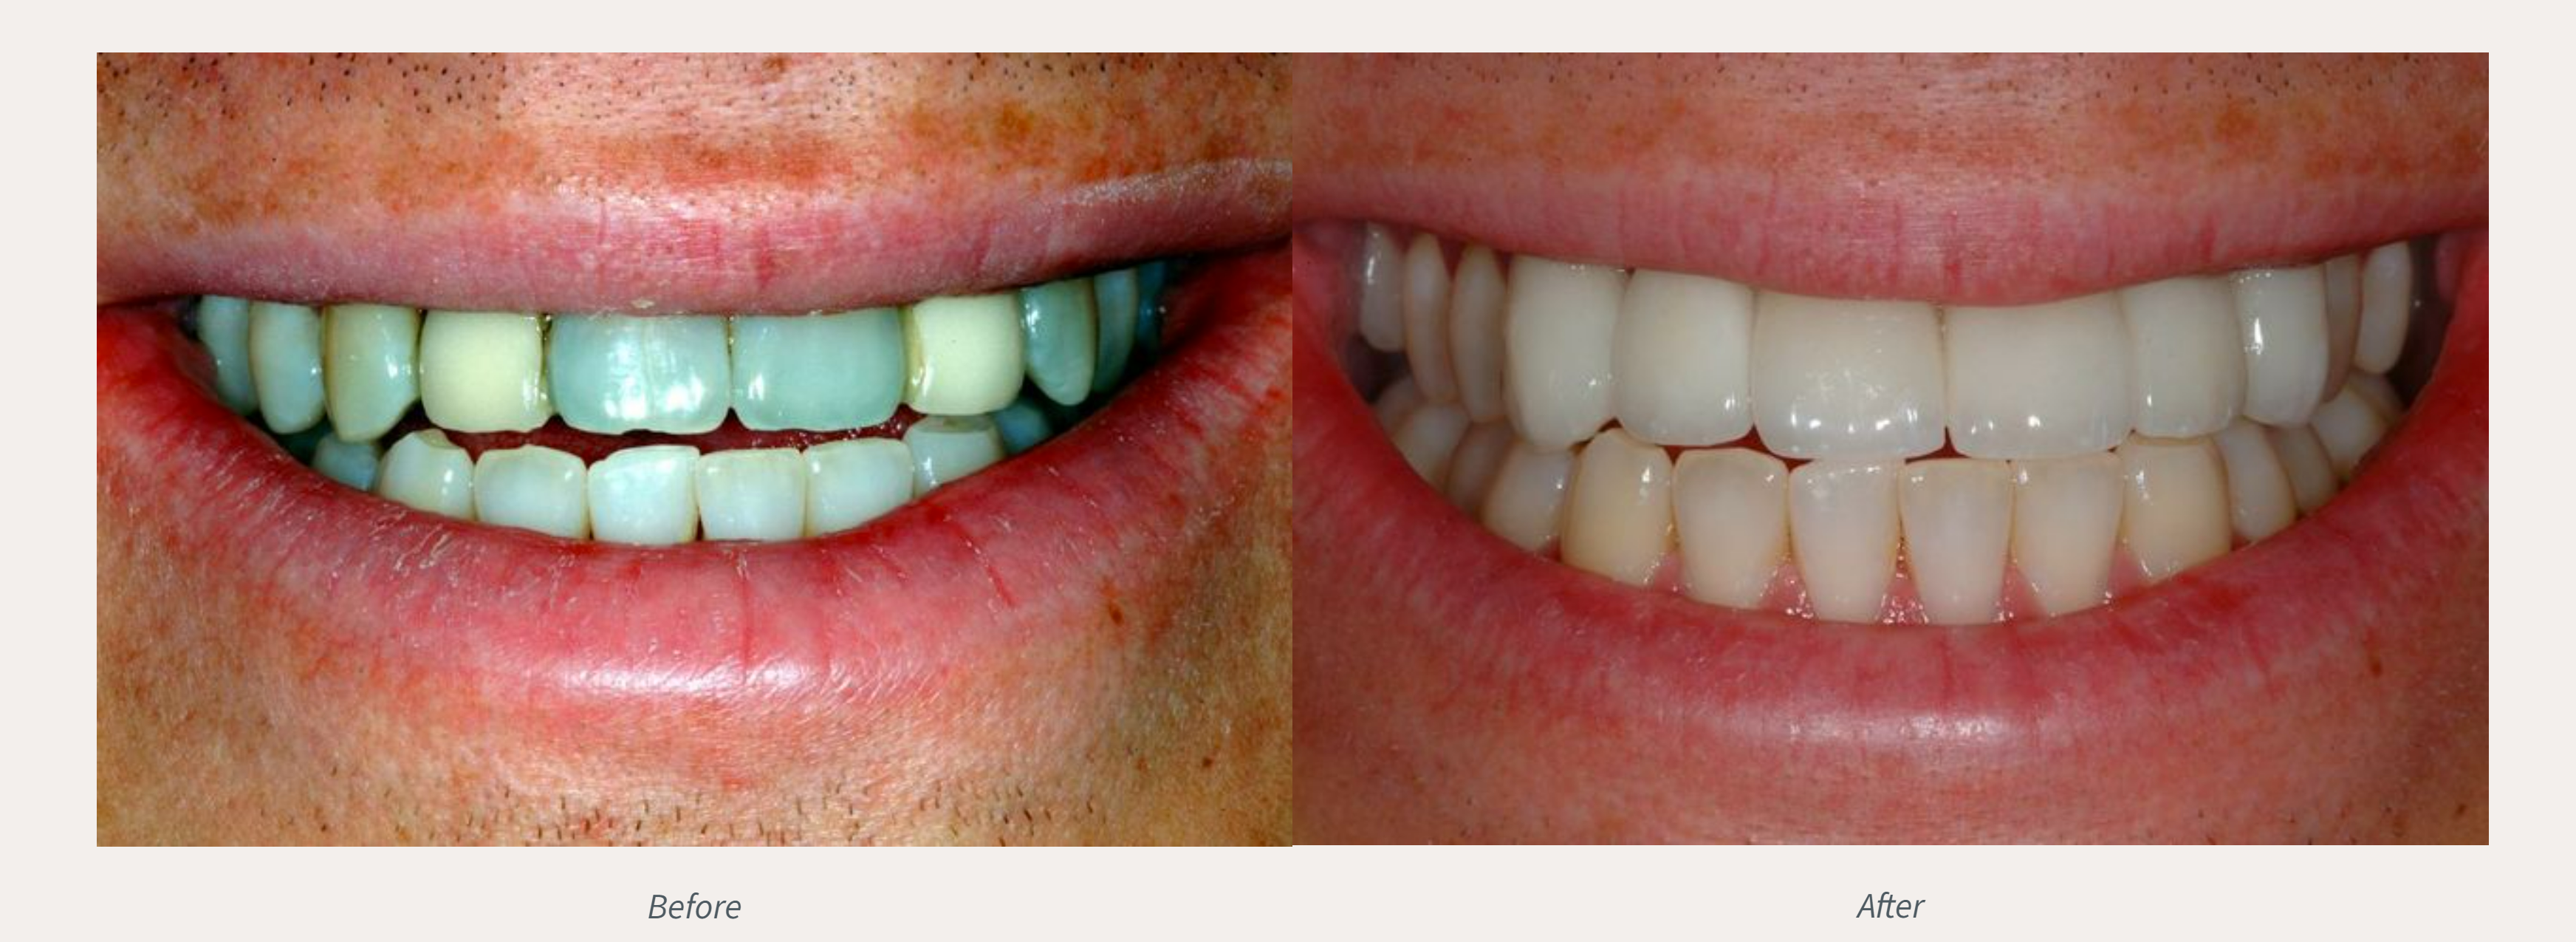 Dental Crowns Before & After from Advanced Dental Care | Valdosta, GA